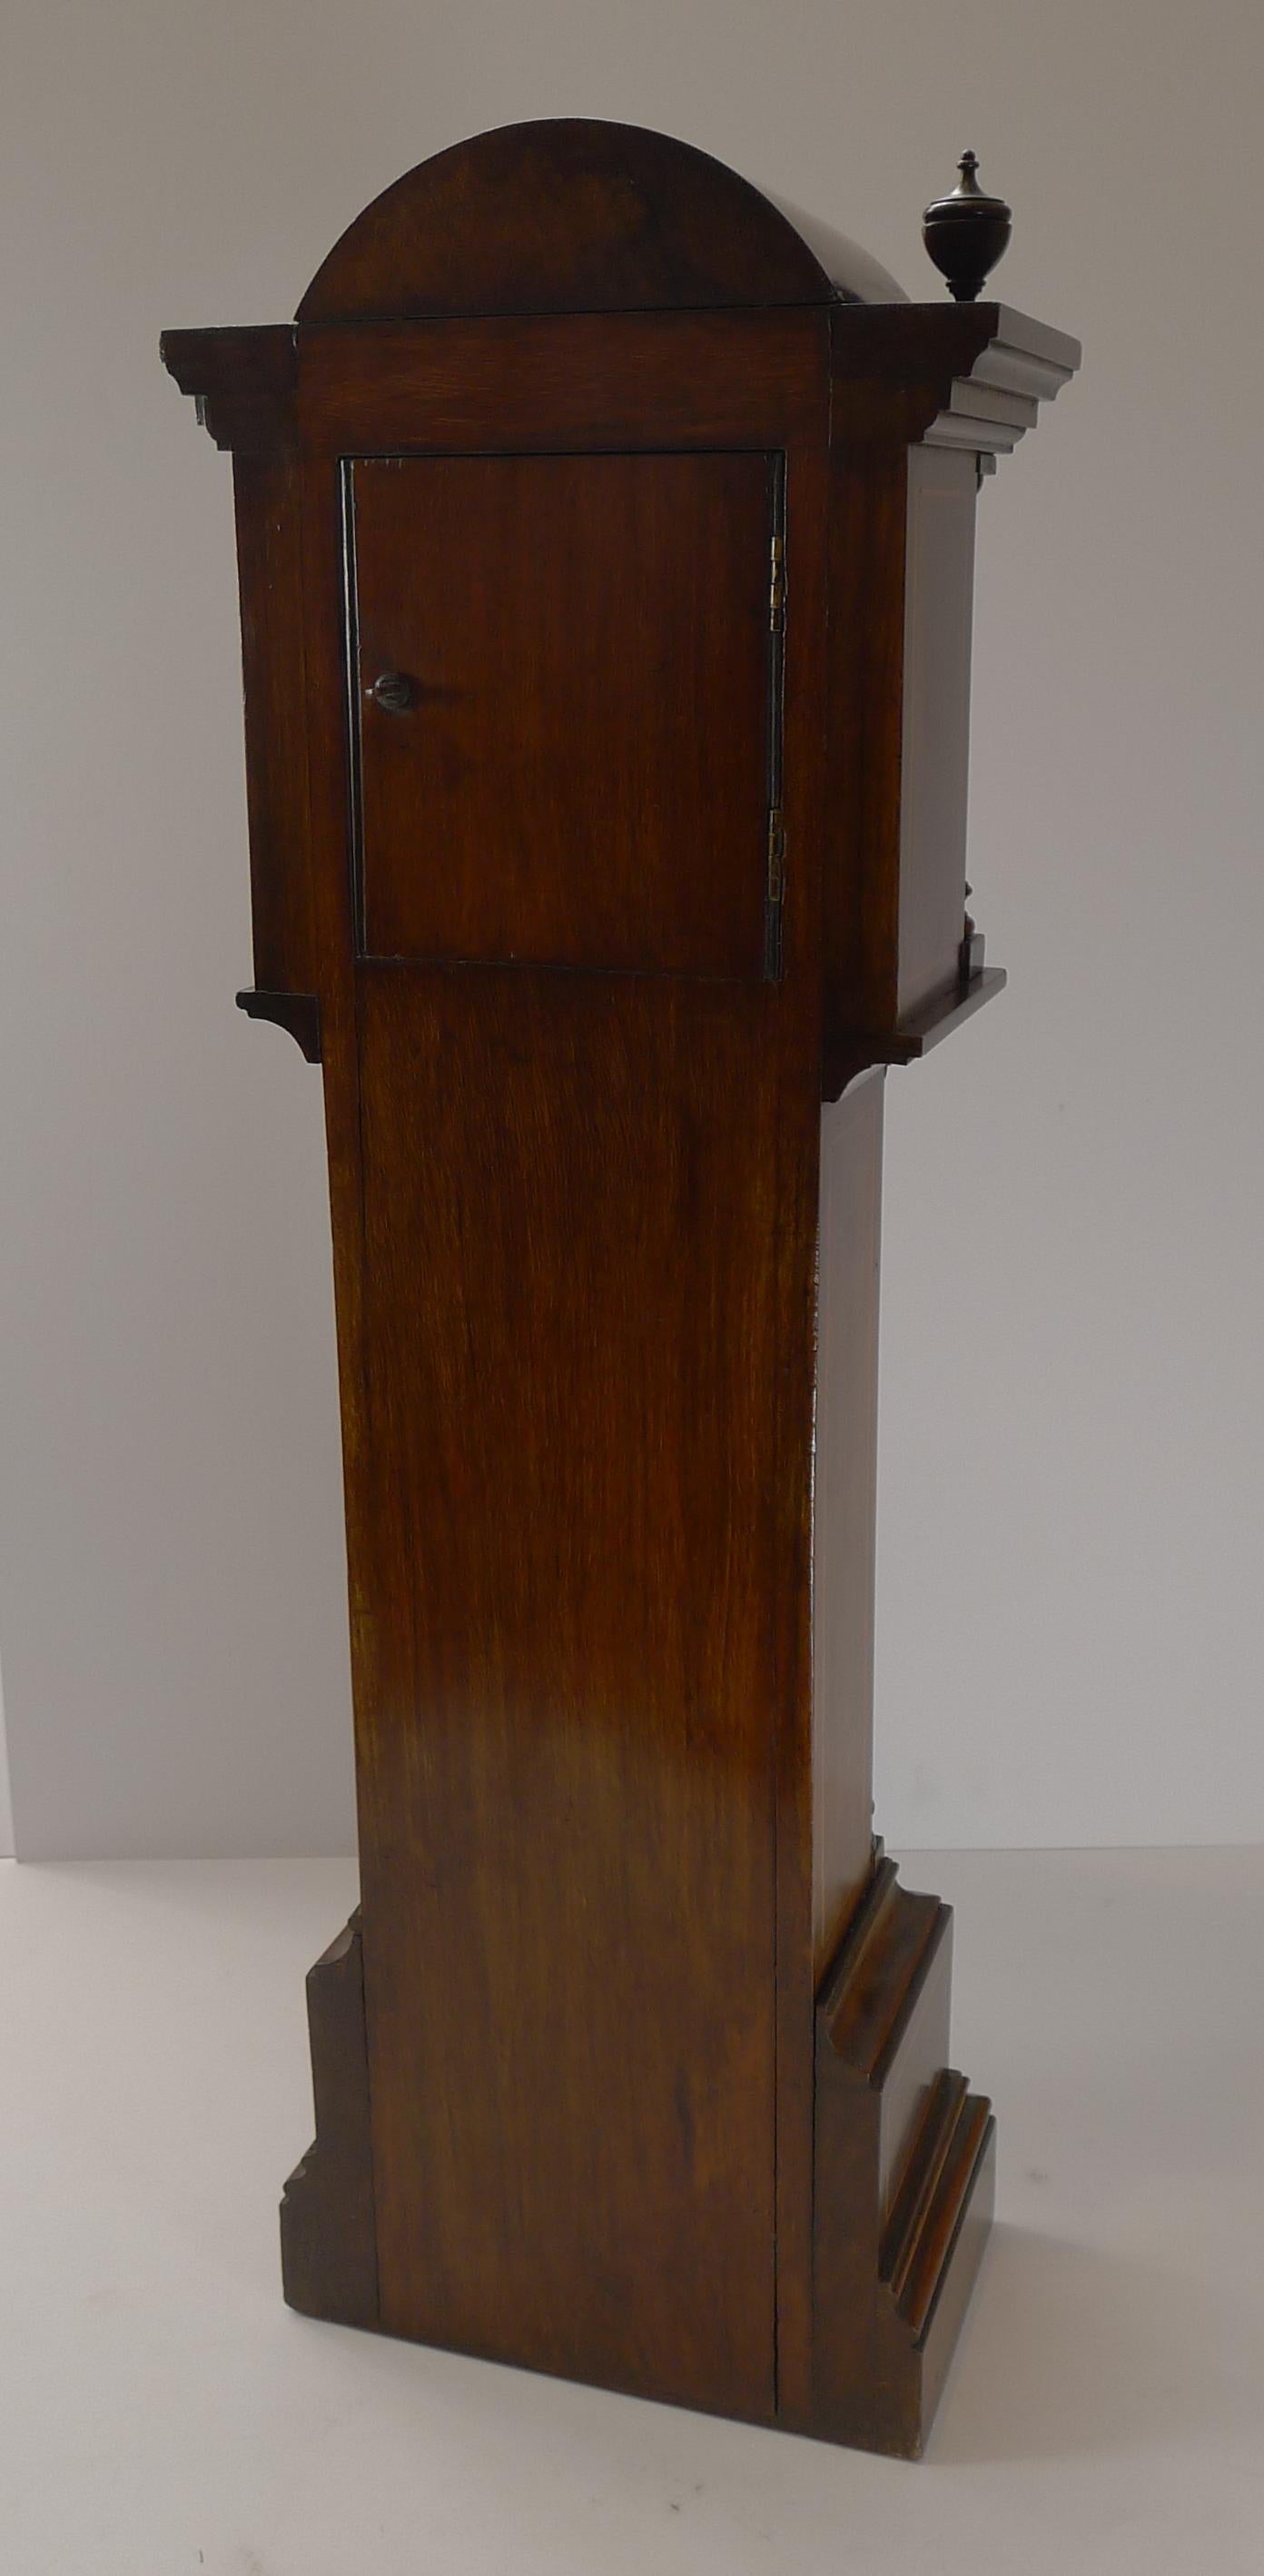 Wood Novelty Antique English Letters / Postal / Mail Box, Longcase Clock Form, c.1910